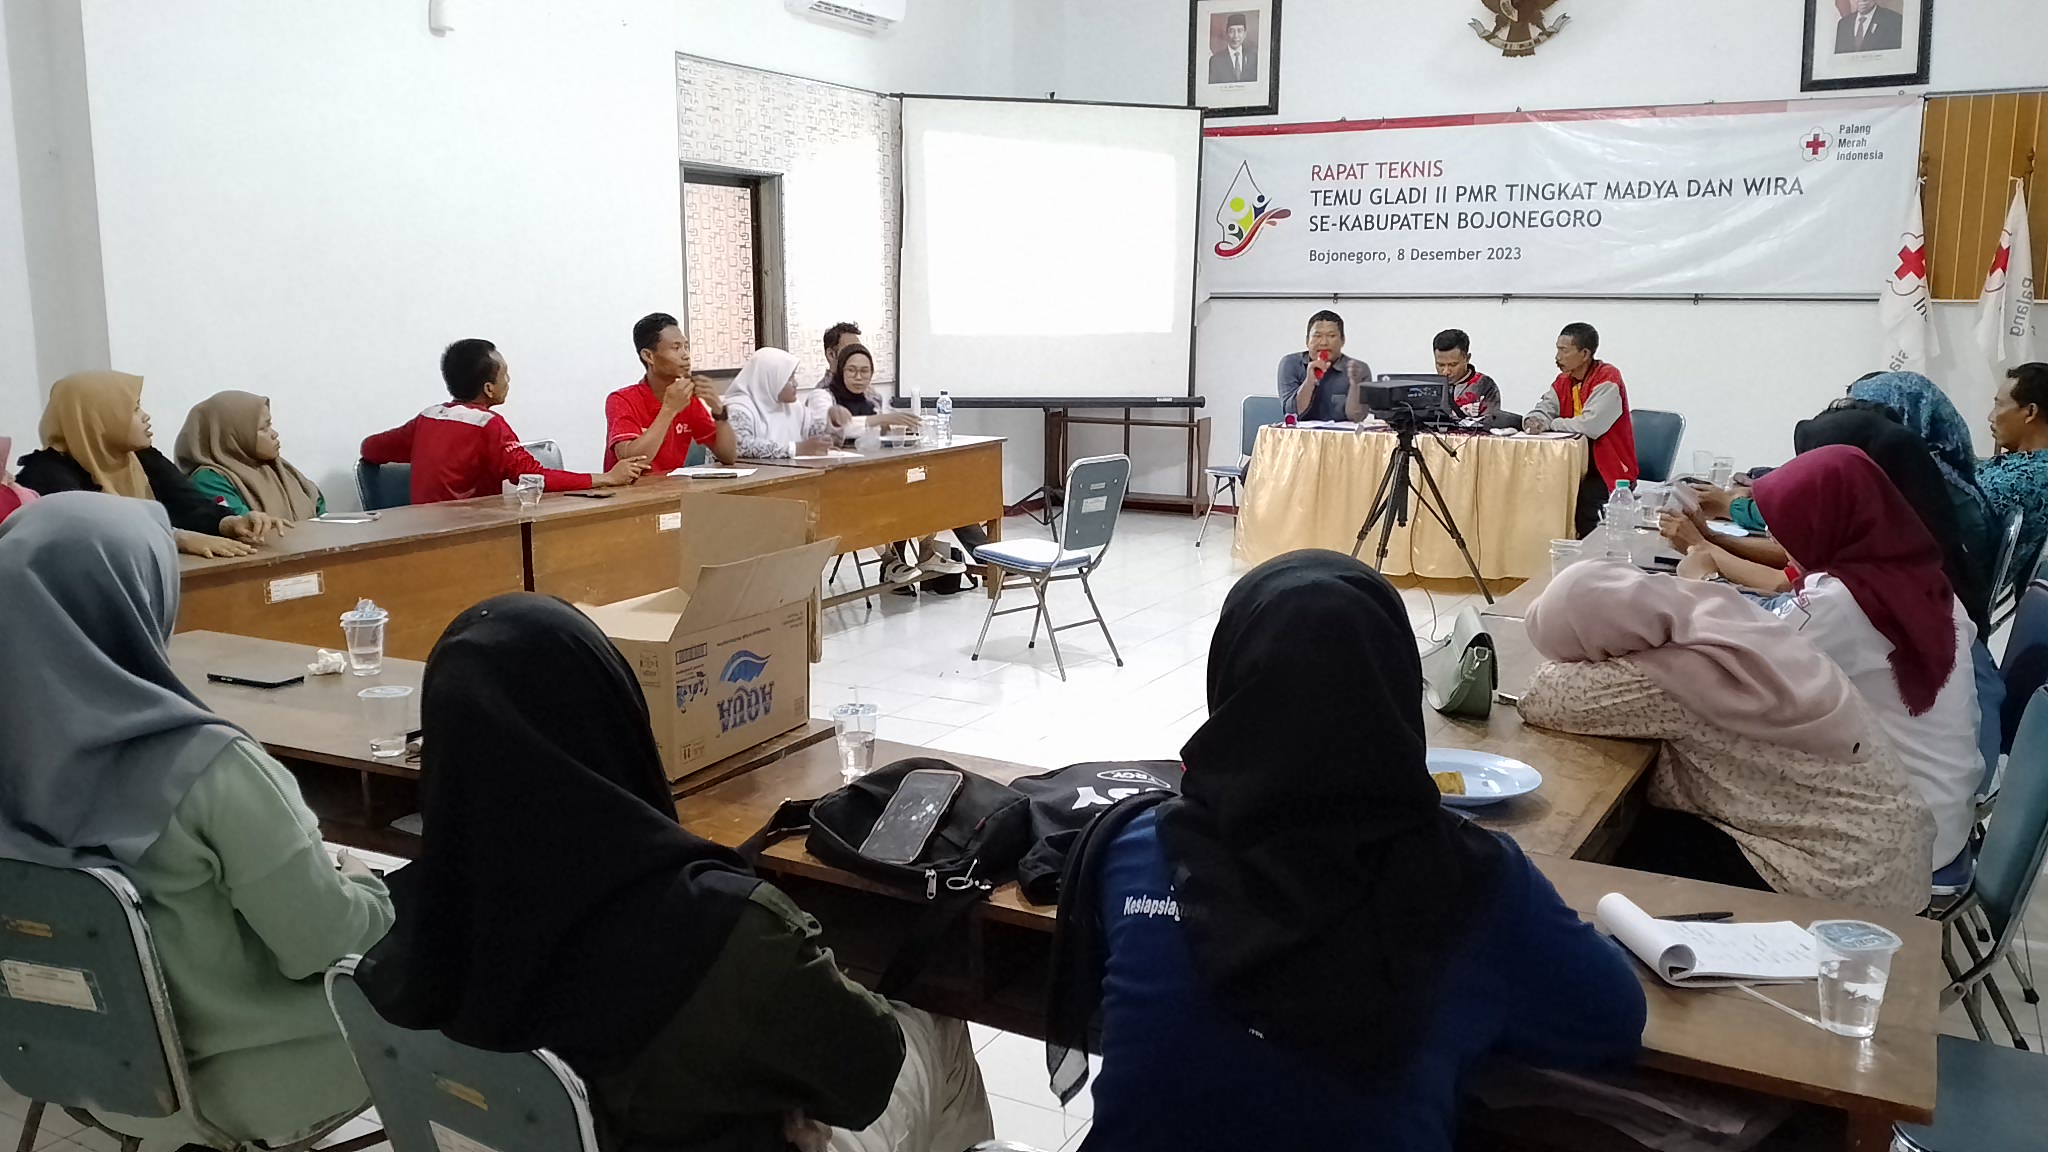 Rapat Teknis Temu Gladi II PMR Madya dan Wira Se Kabupaten Bojonegoro